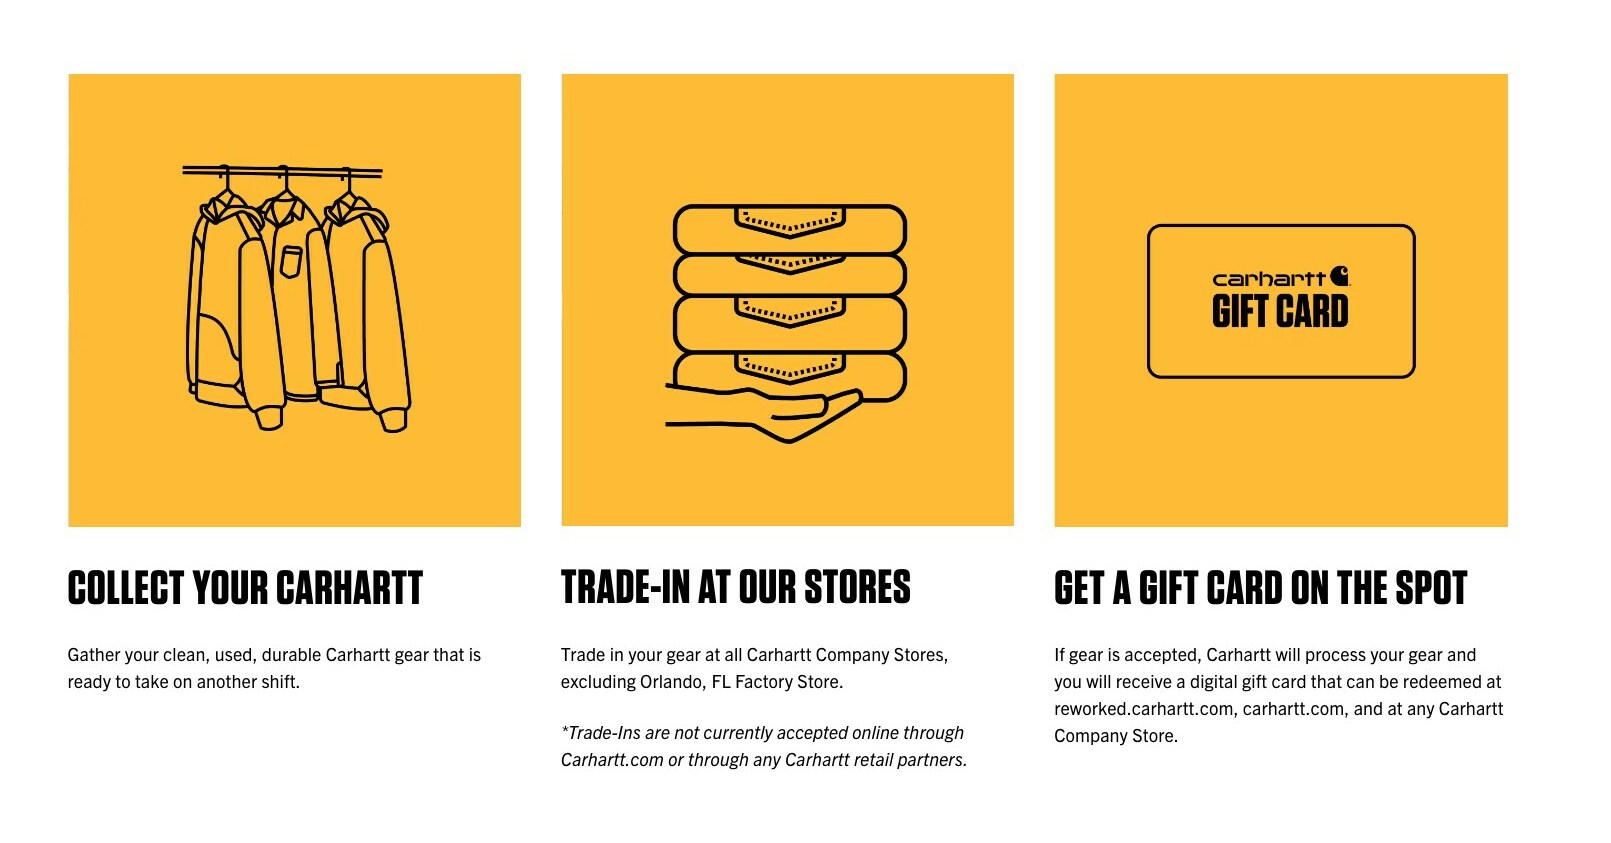 Carhartt launches new resale program 'Carhartt Reworked